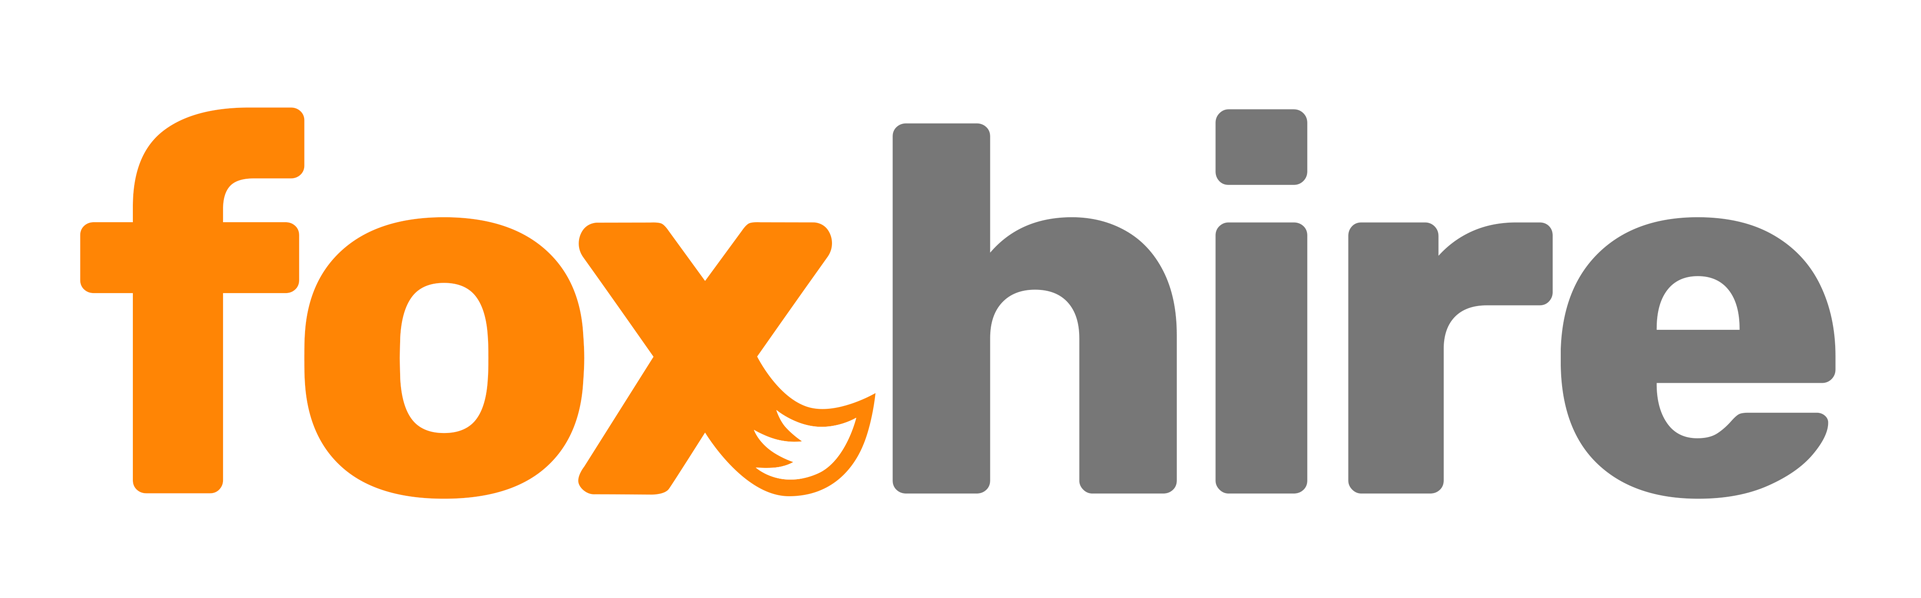 FoxHire, LLC Logo